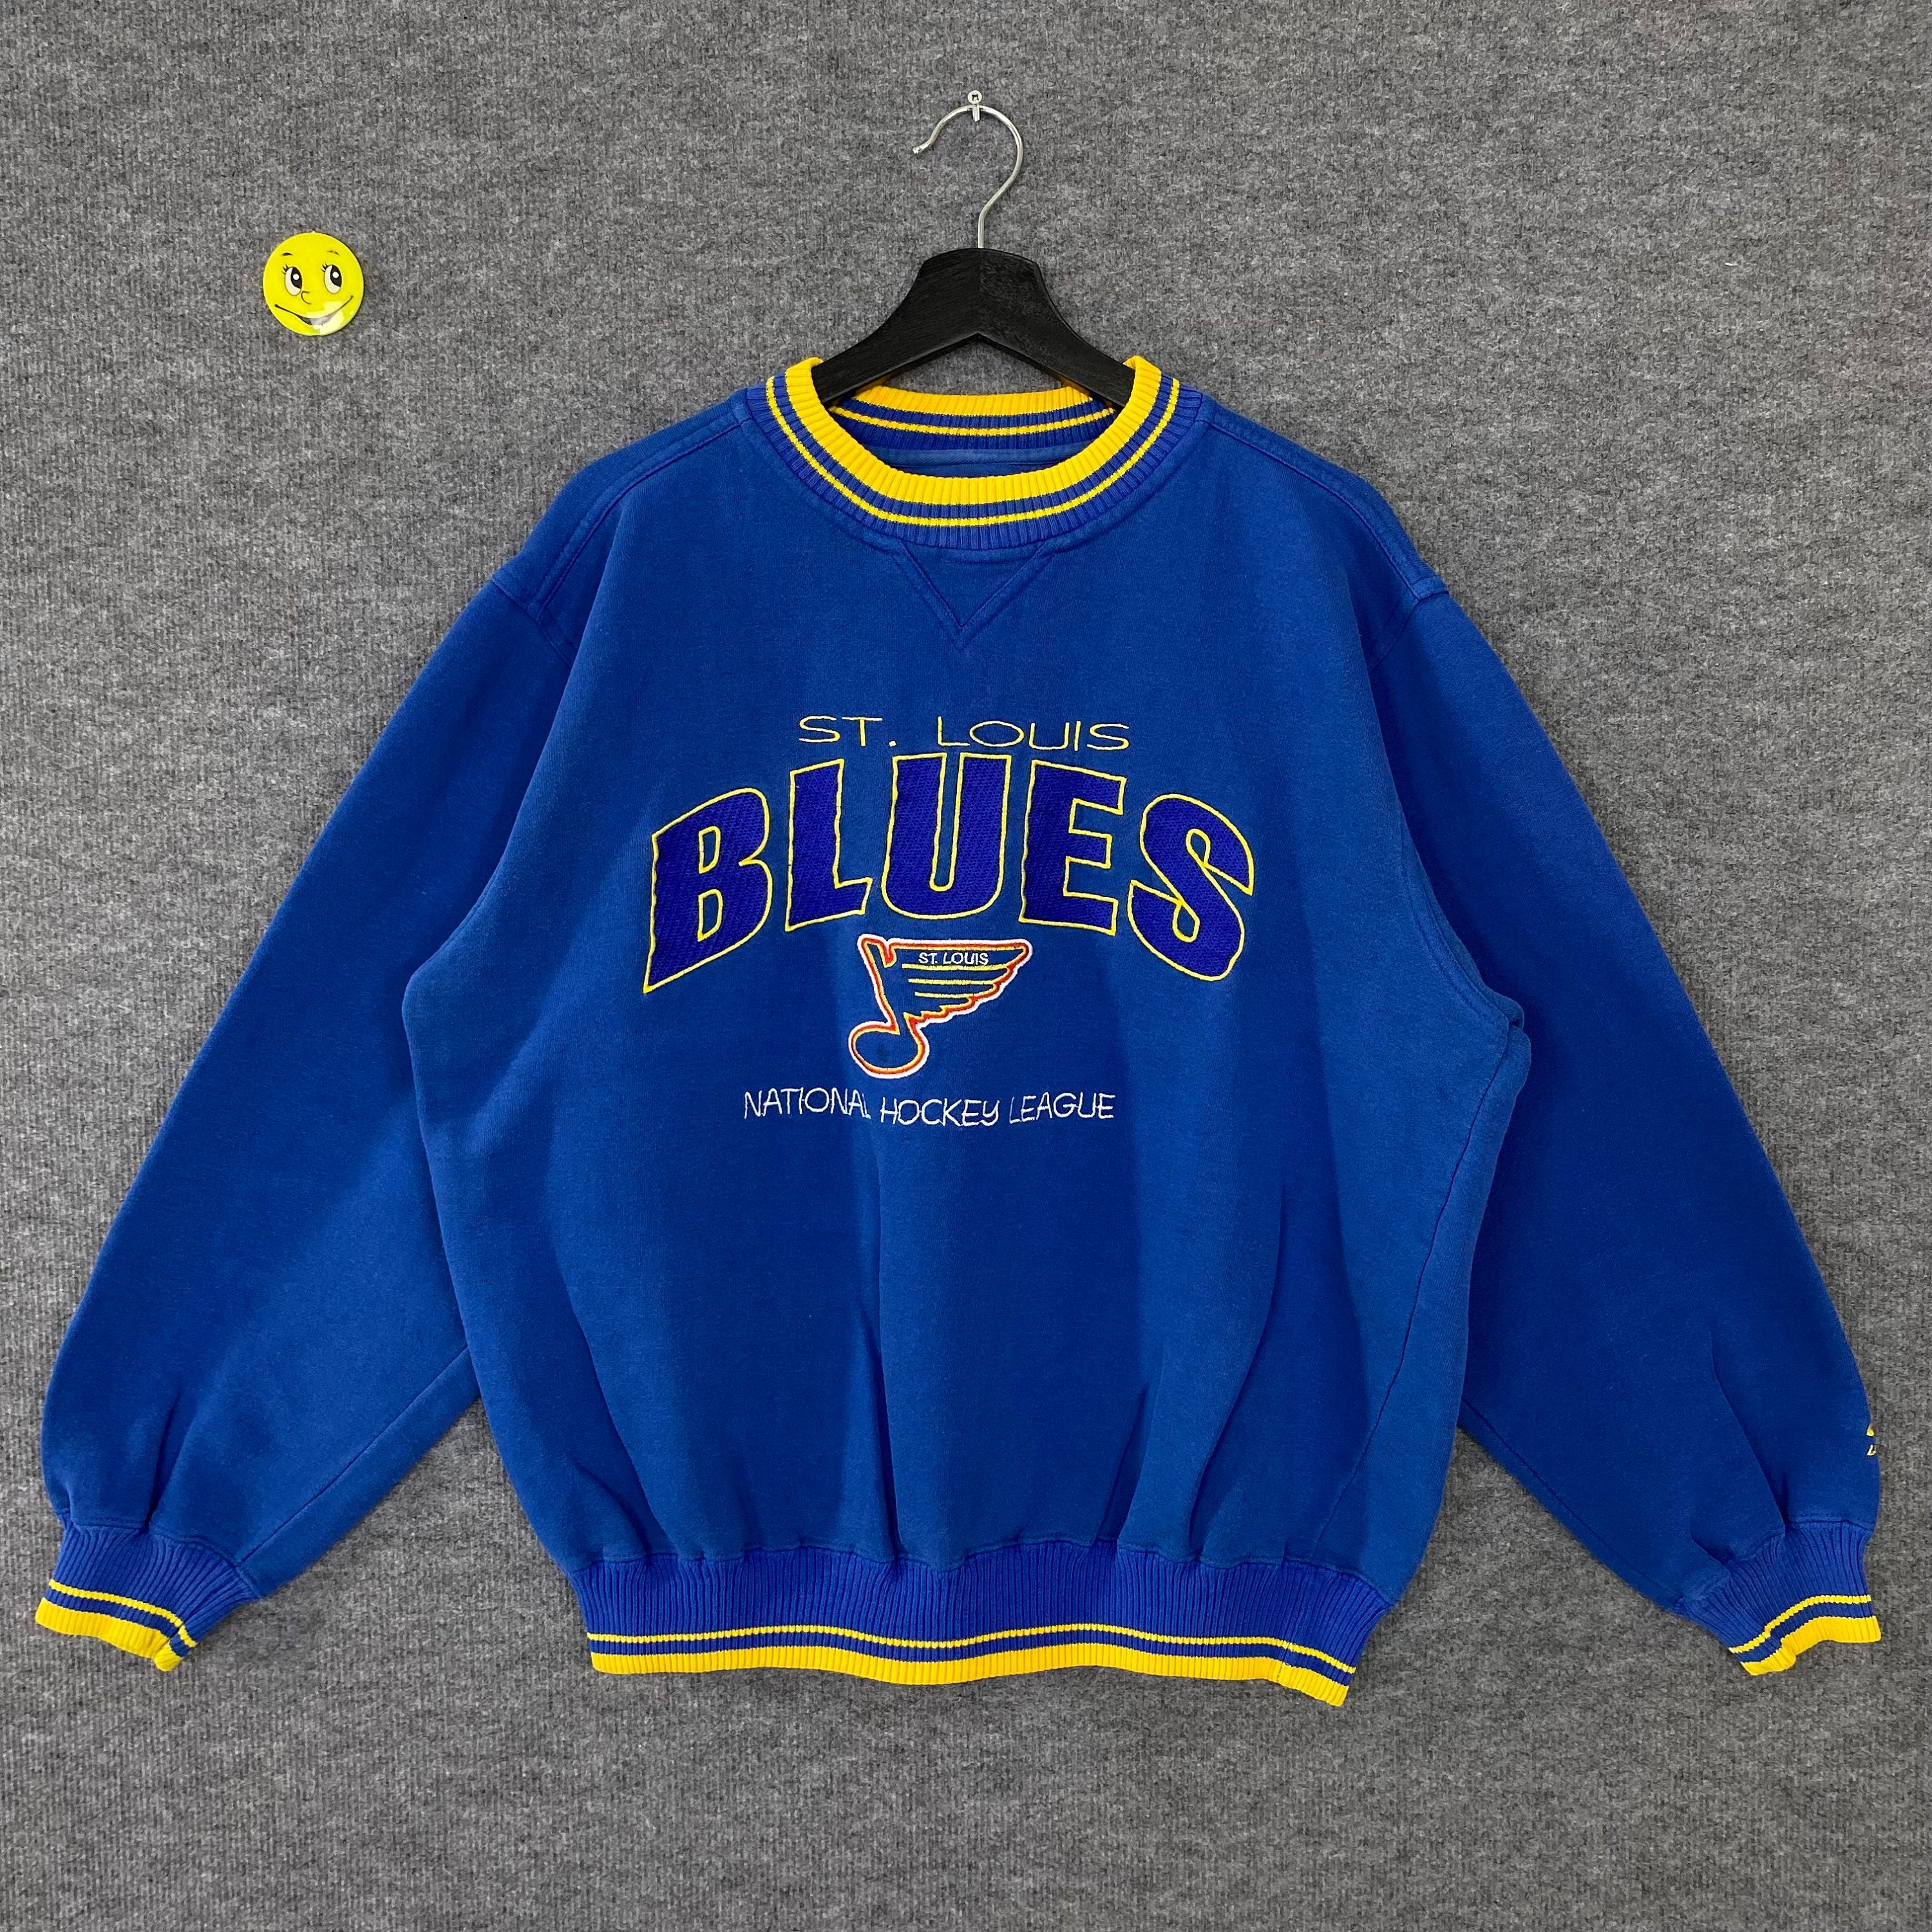 Men's adidas Heathered Gray St. Louis Blues Vintage Pullover Sweatshirt